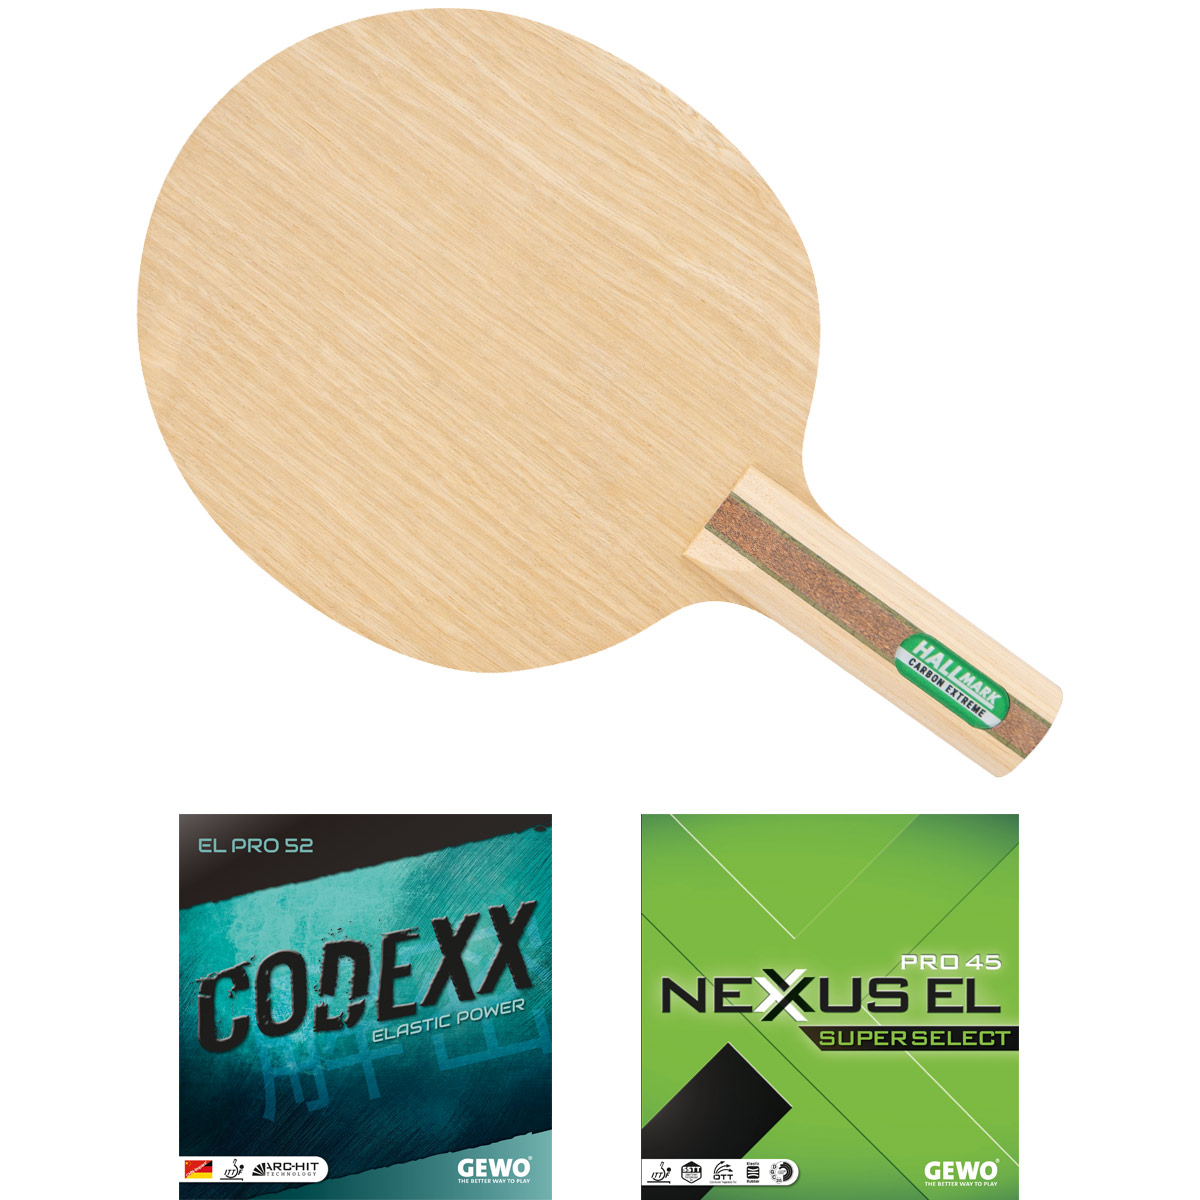 HALLMARK Schläger: Holz Carbon Extreme mit Codexx EL Pro52 + Nexxus EL Pro45 SupSel  konkav